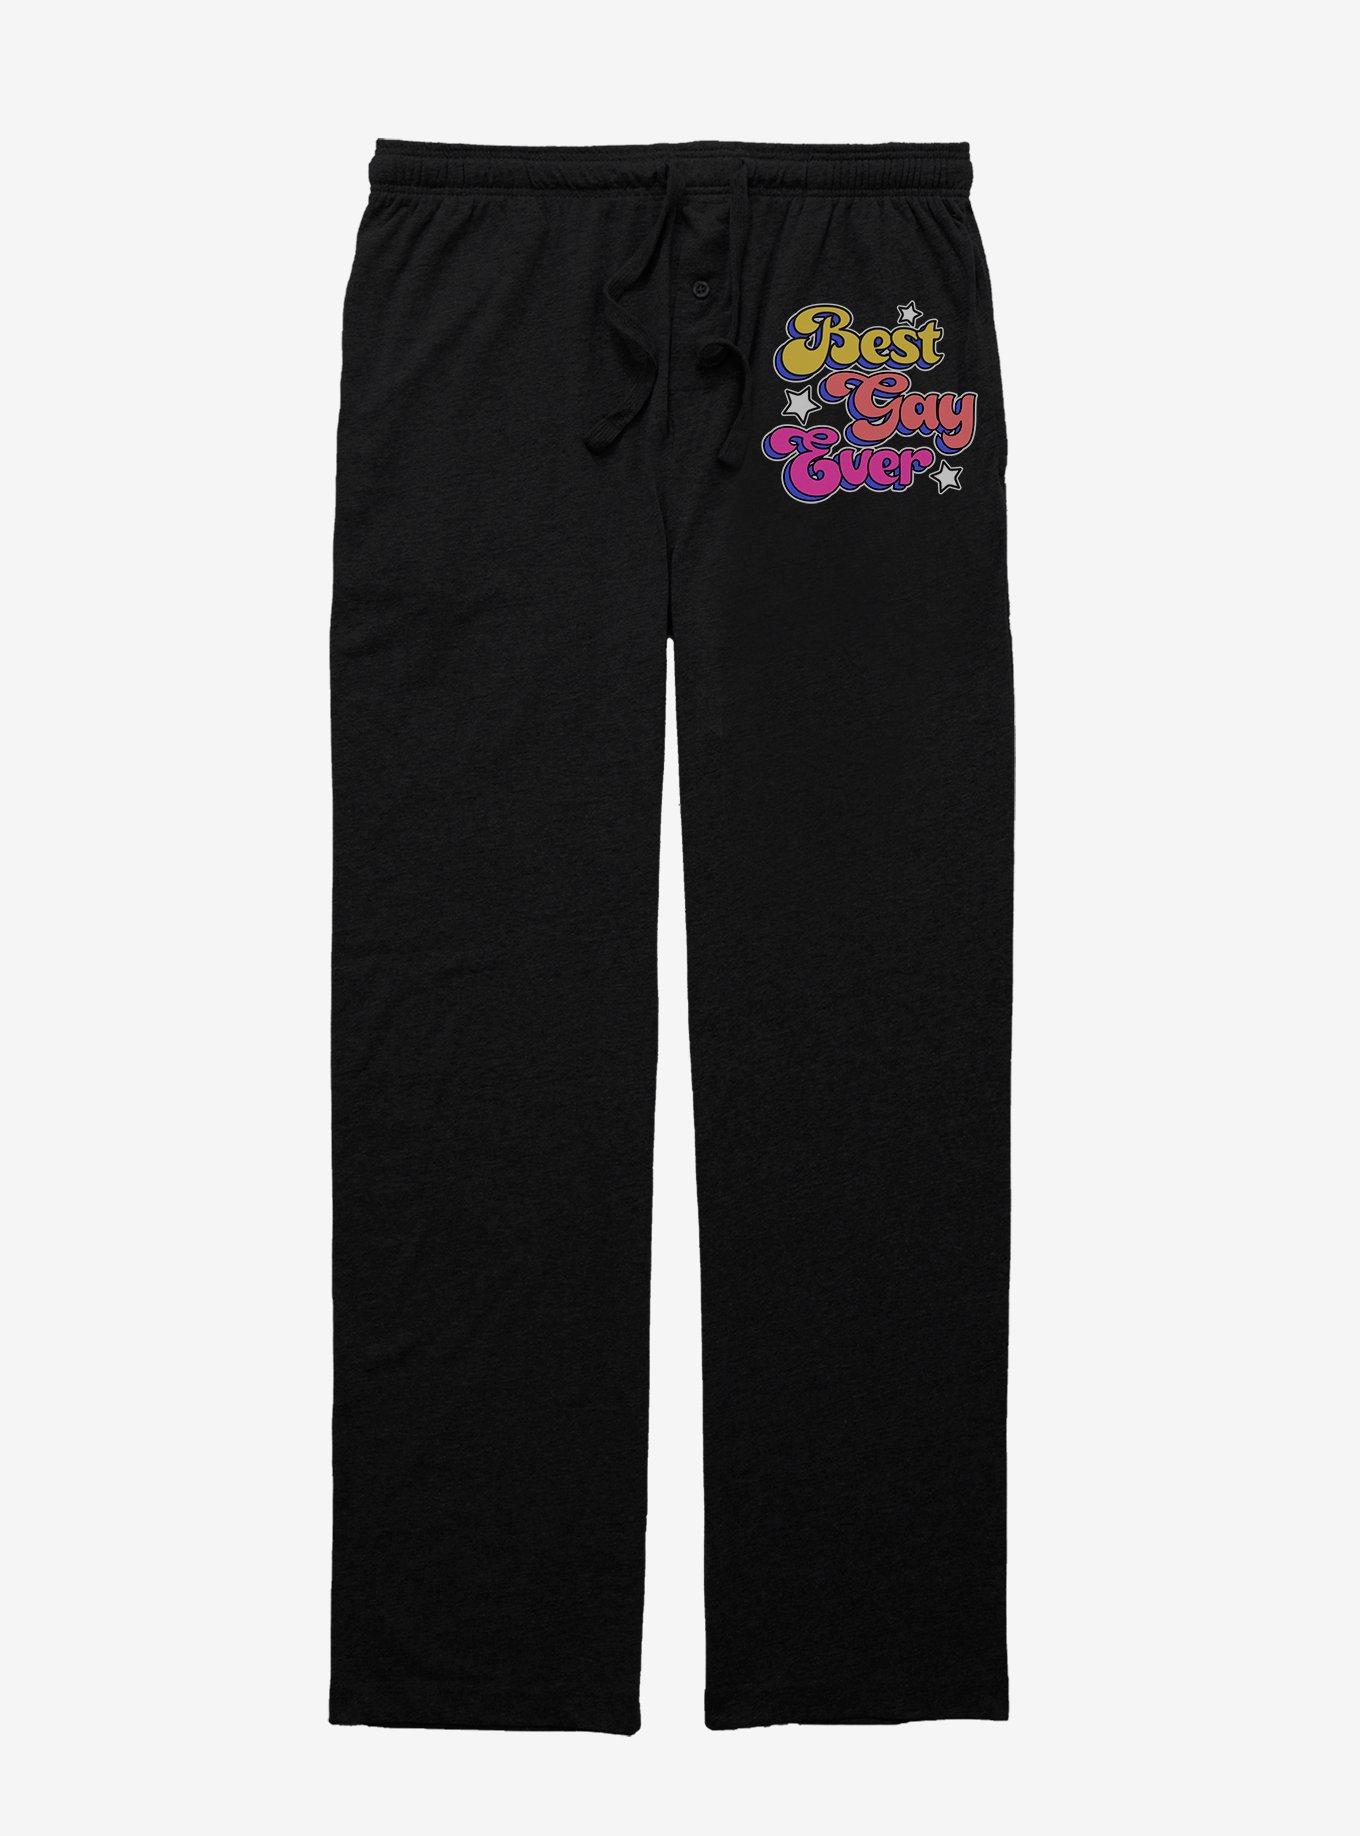 Best Gay Ever Pajama Pants, BLACK, hi-res